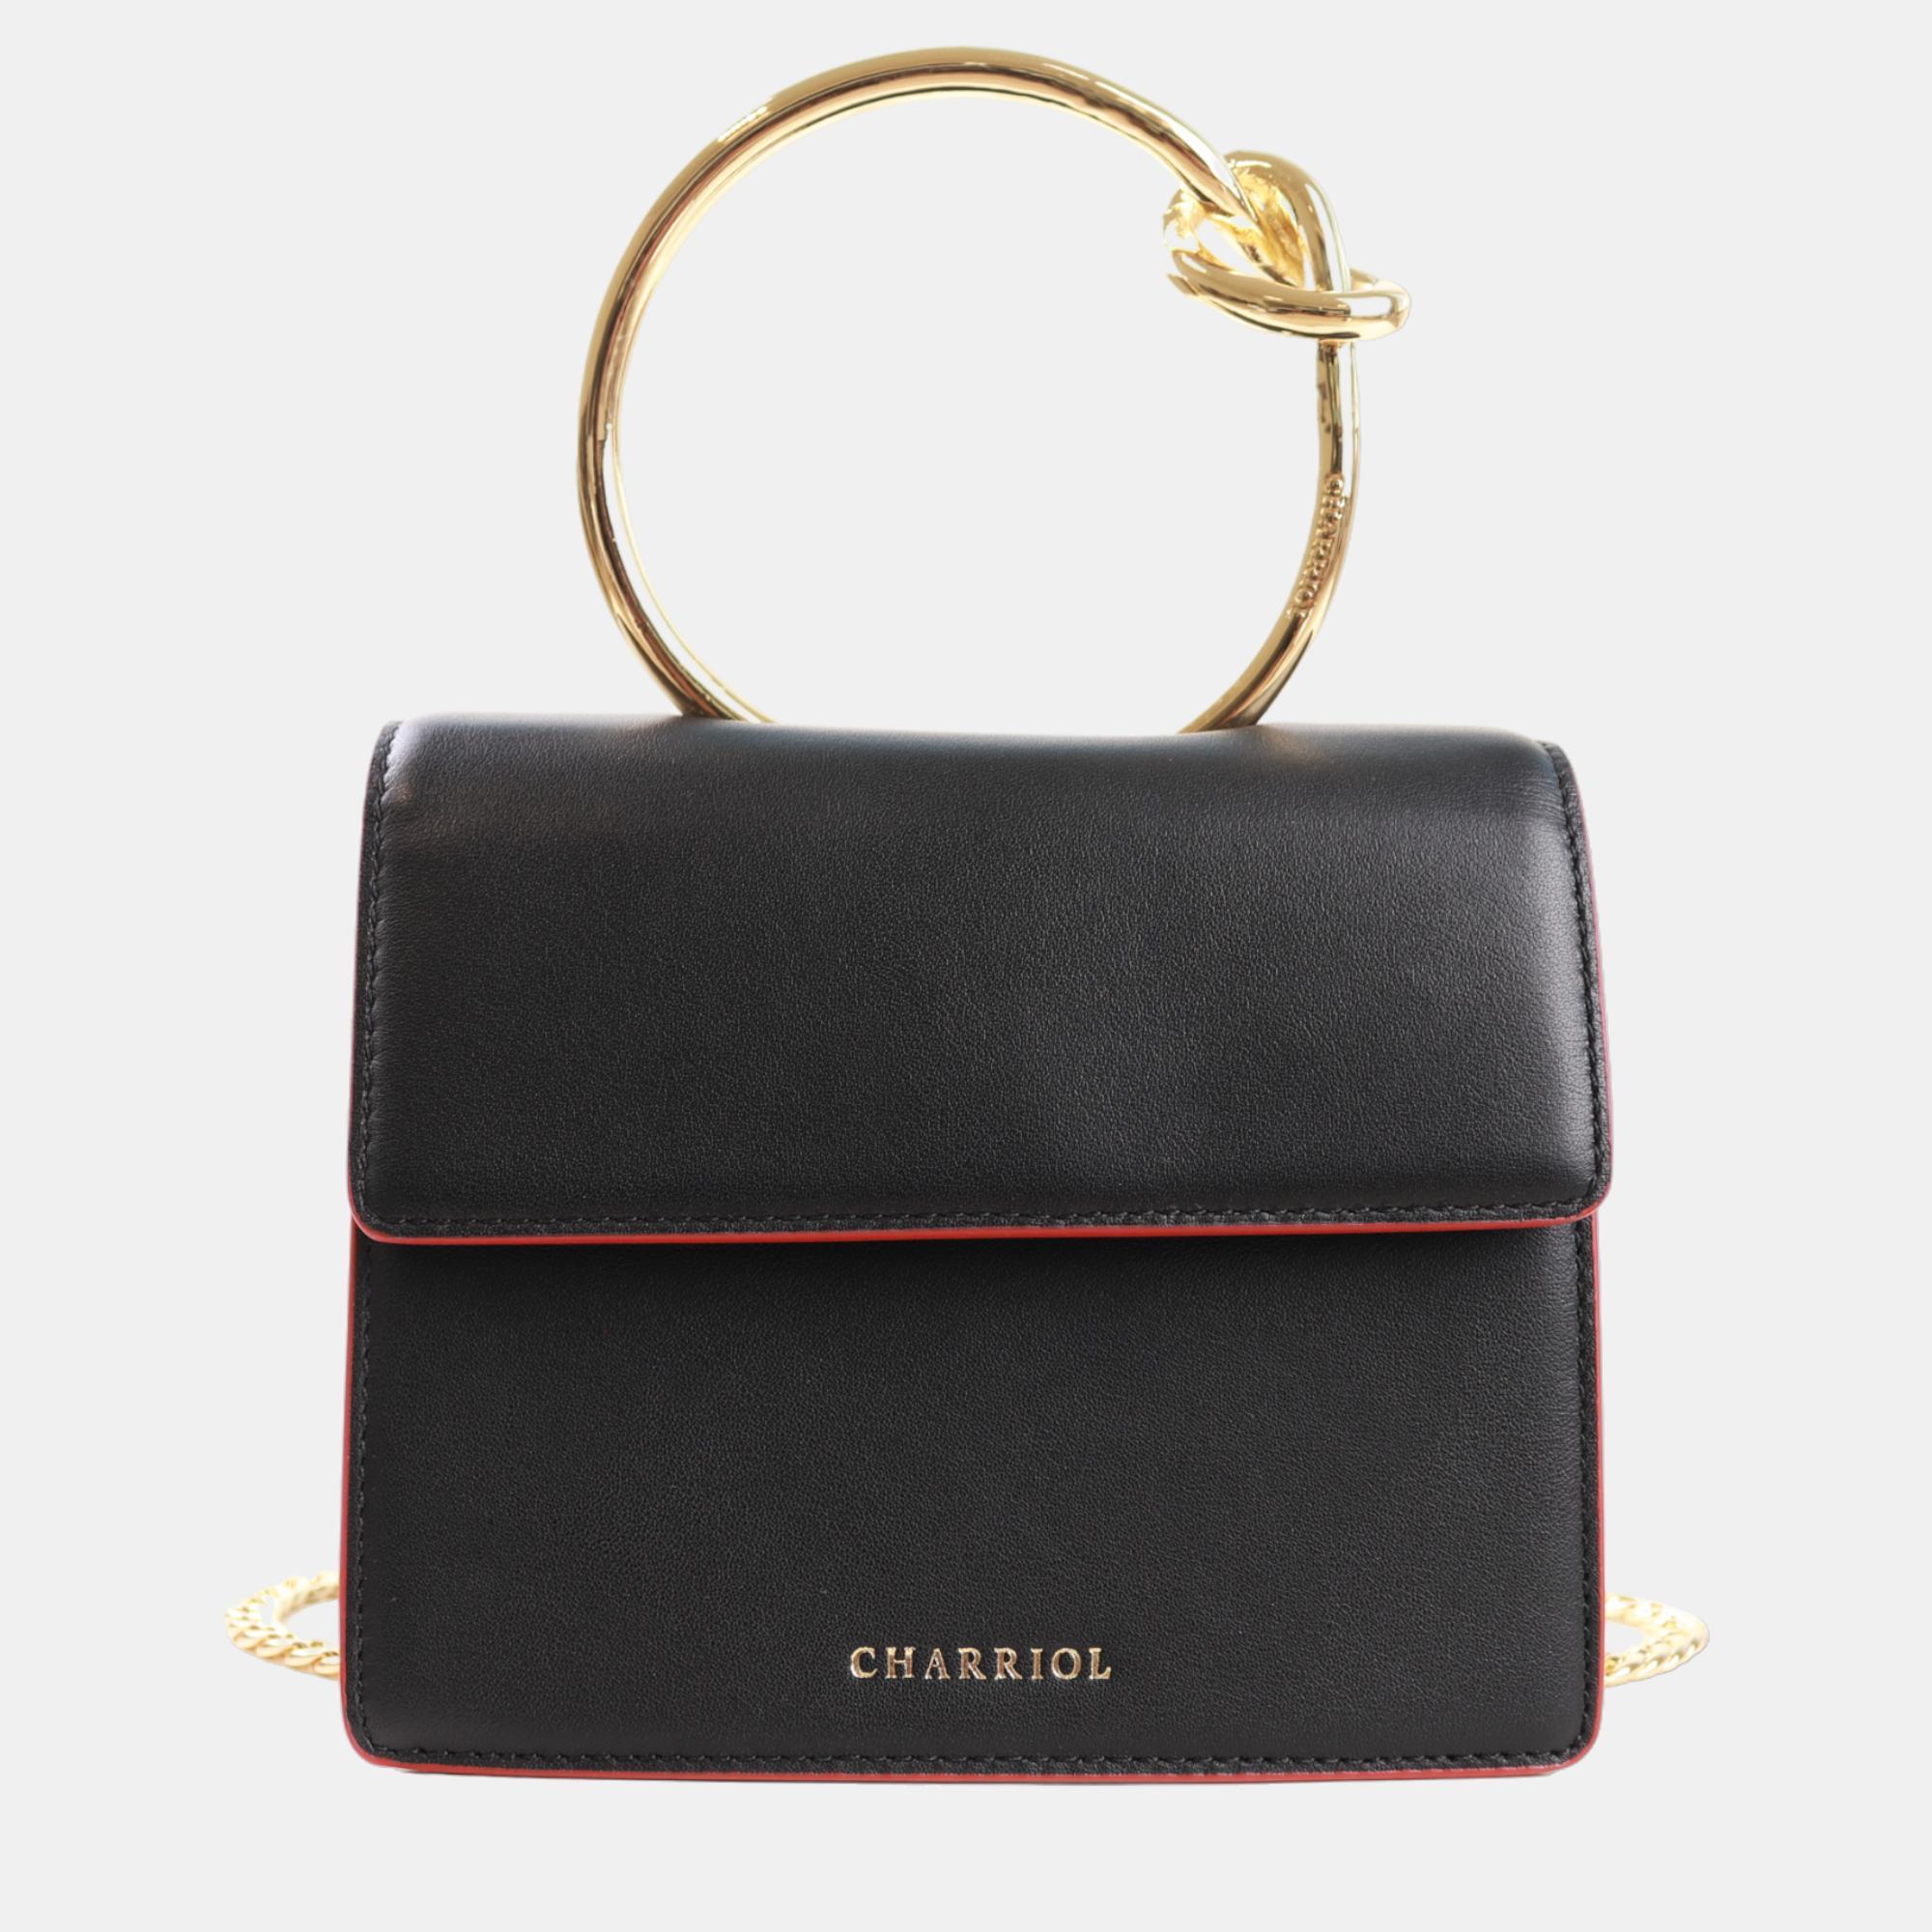 Charriol black leather zenitude handbag